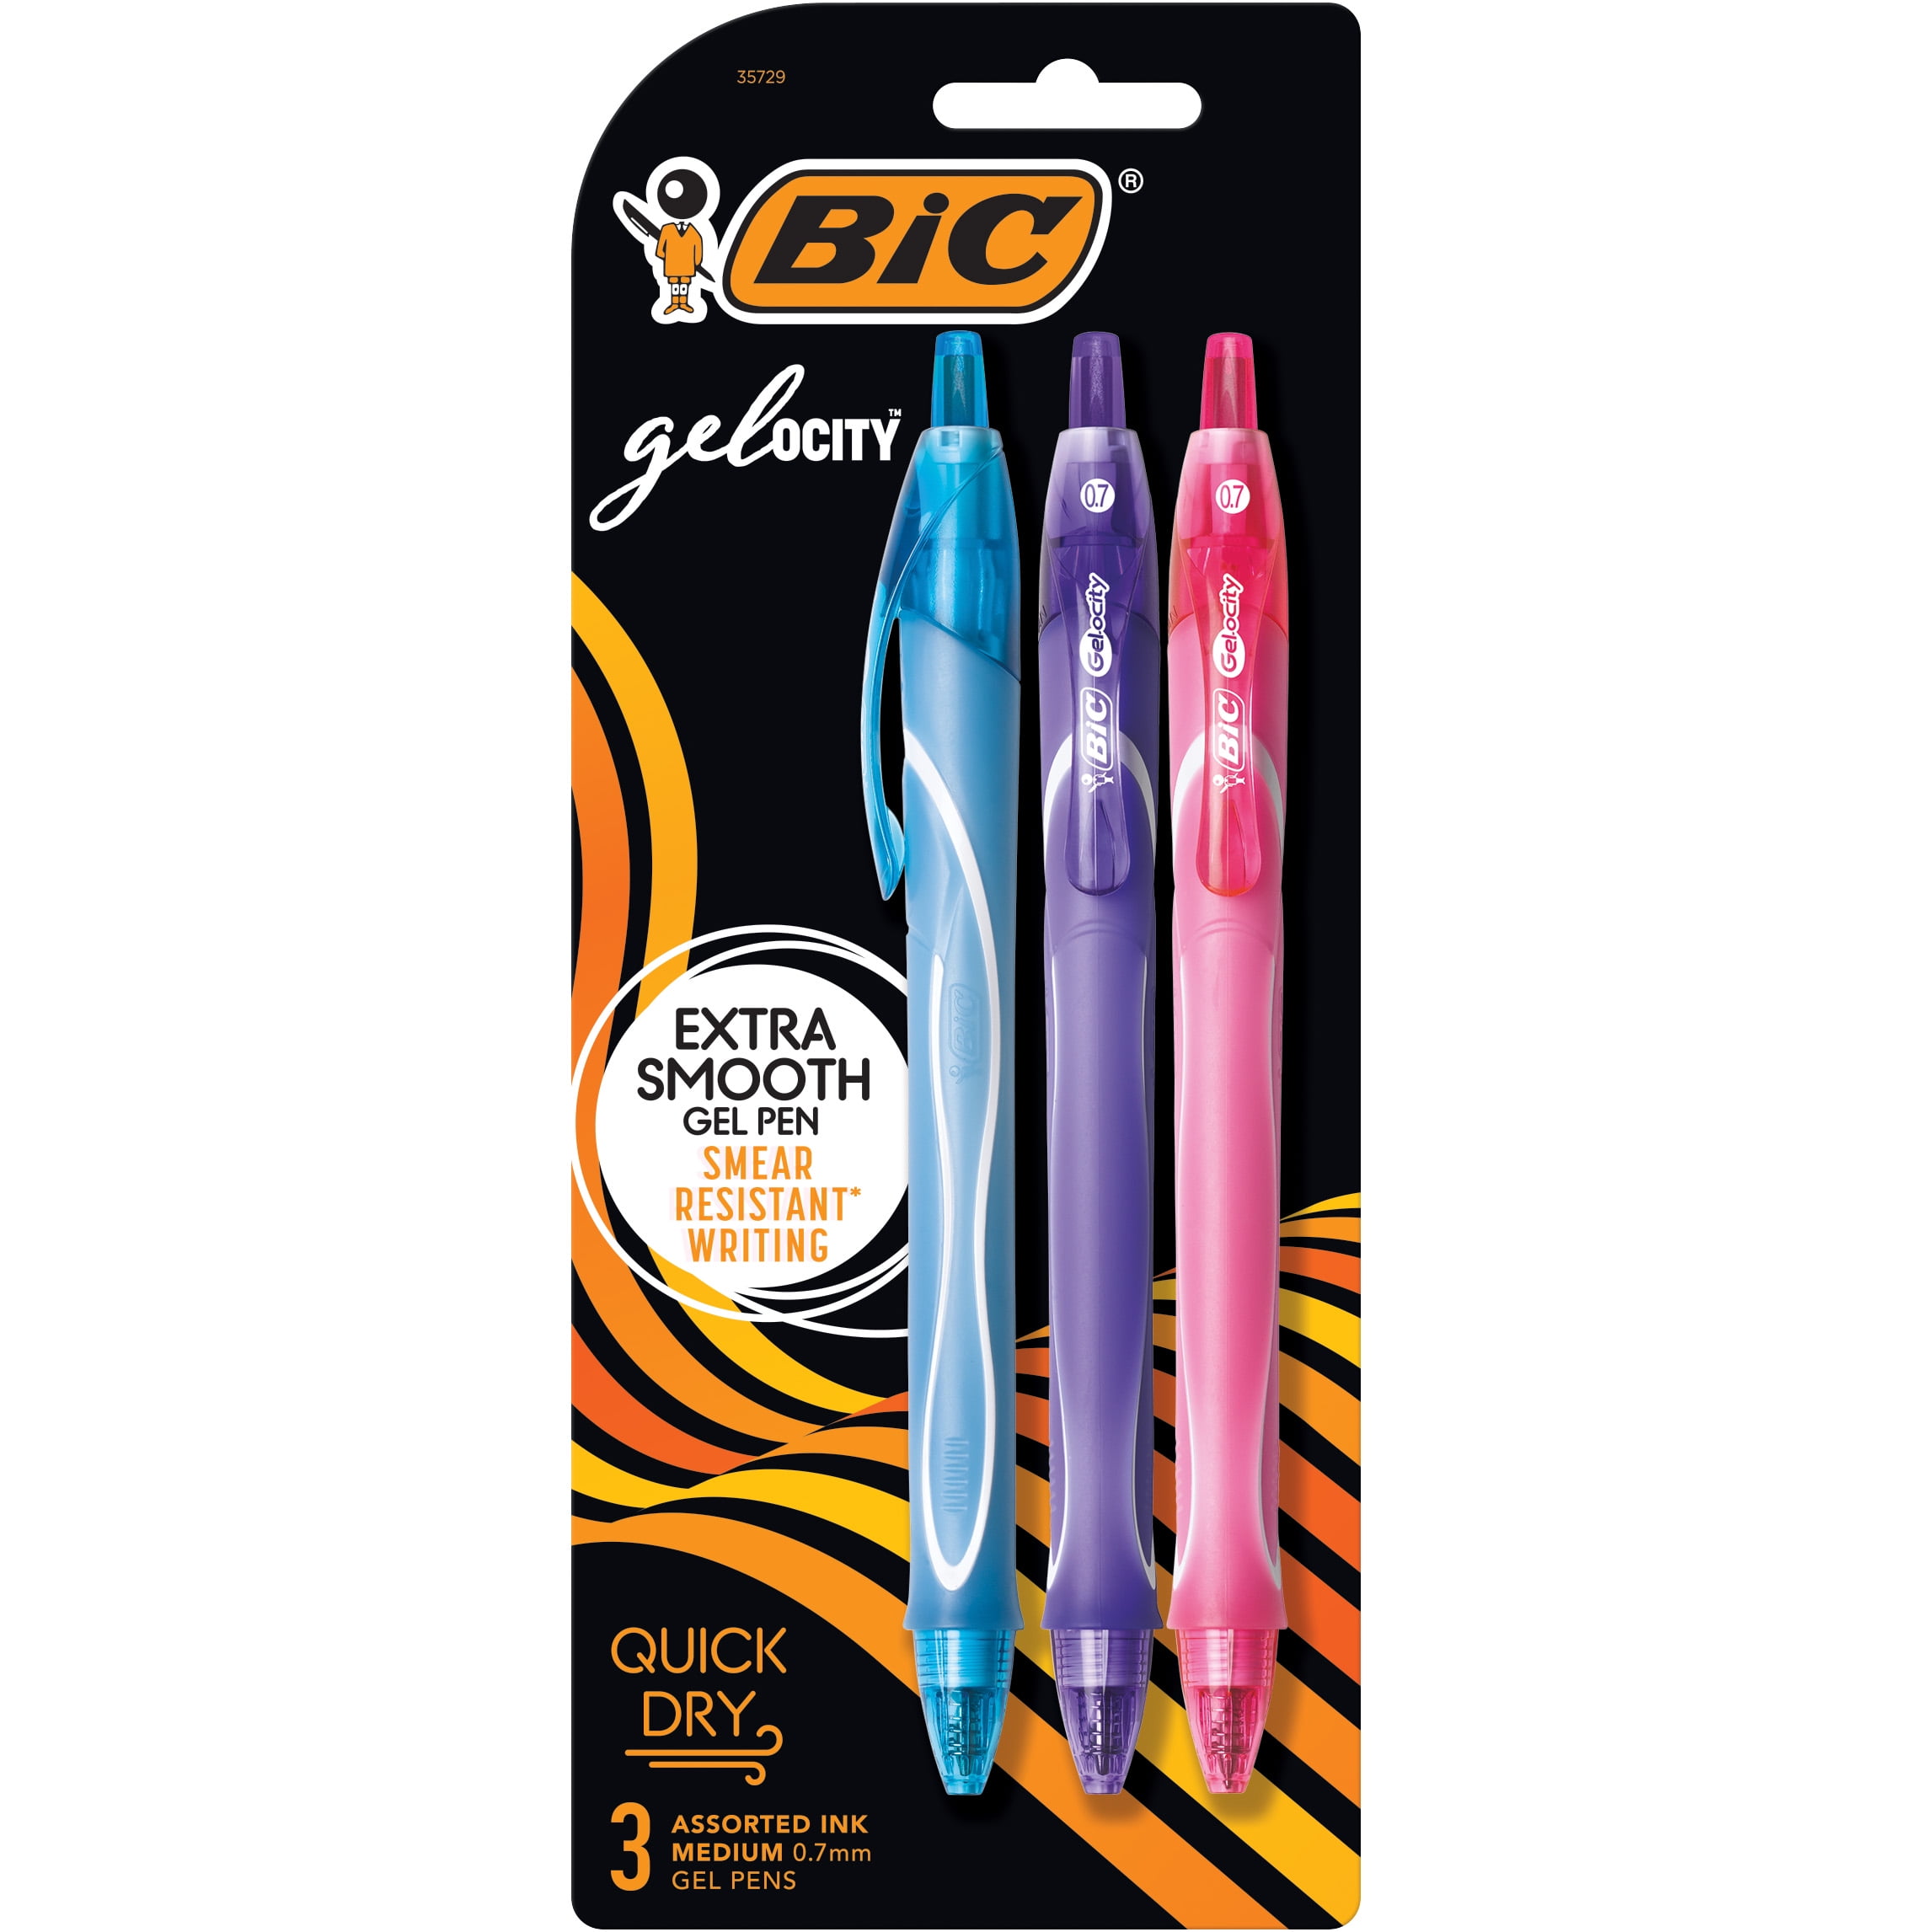 Lot of 4-3 pack BIC Gelocity Gel Pens 0.7mm Point Retractable.Pink,Blue,Purple. 